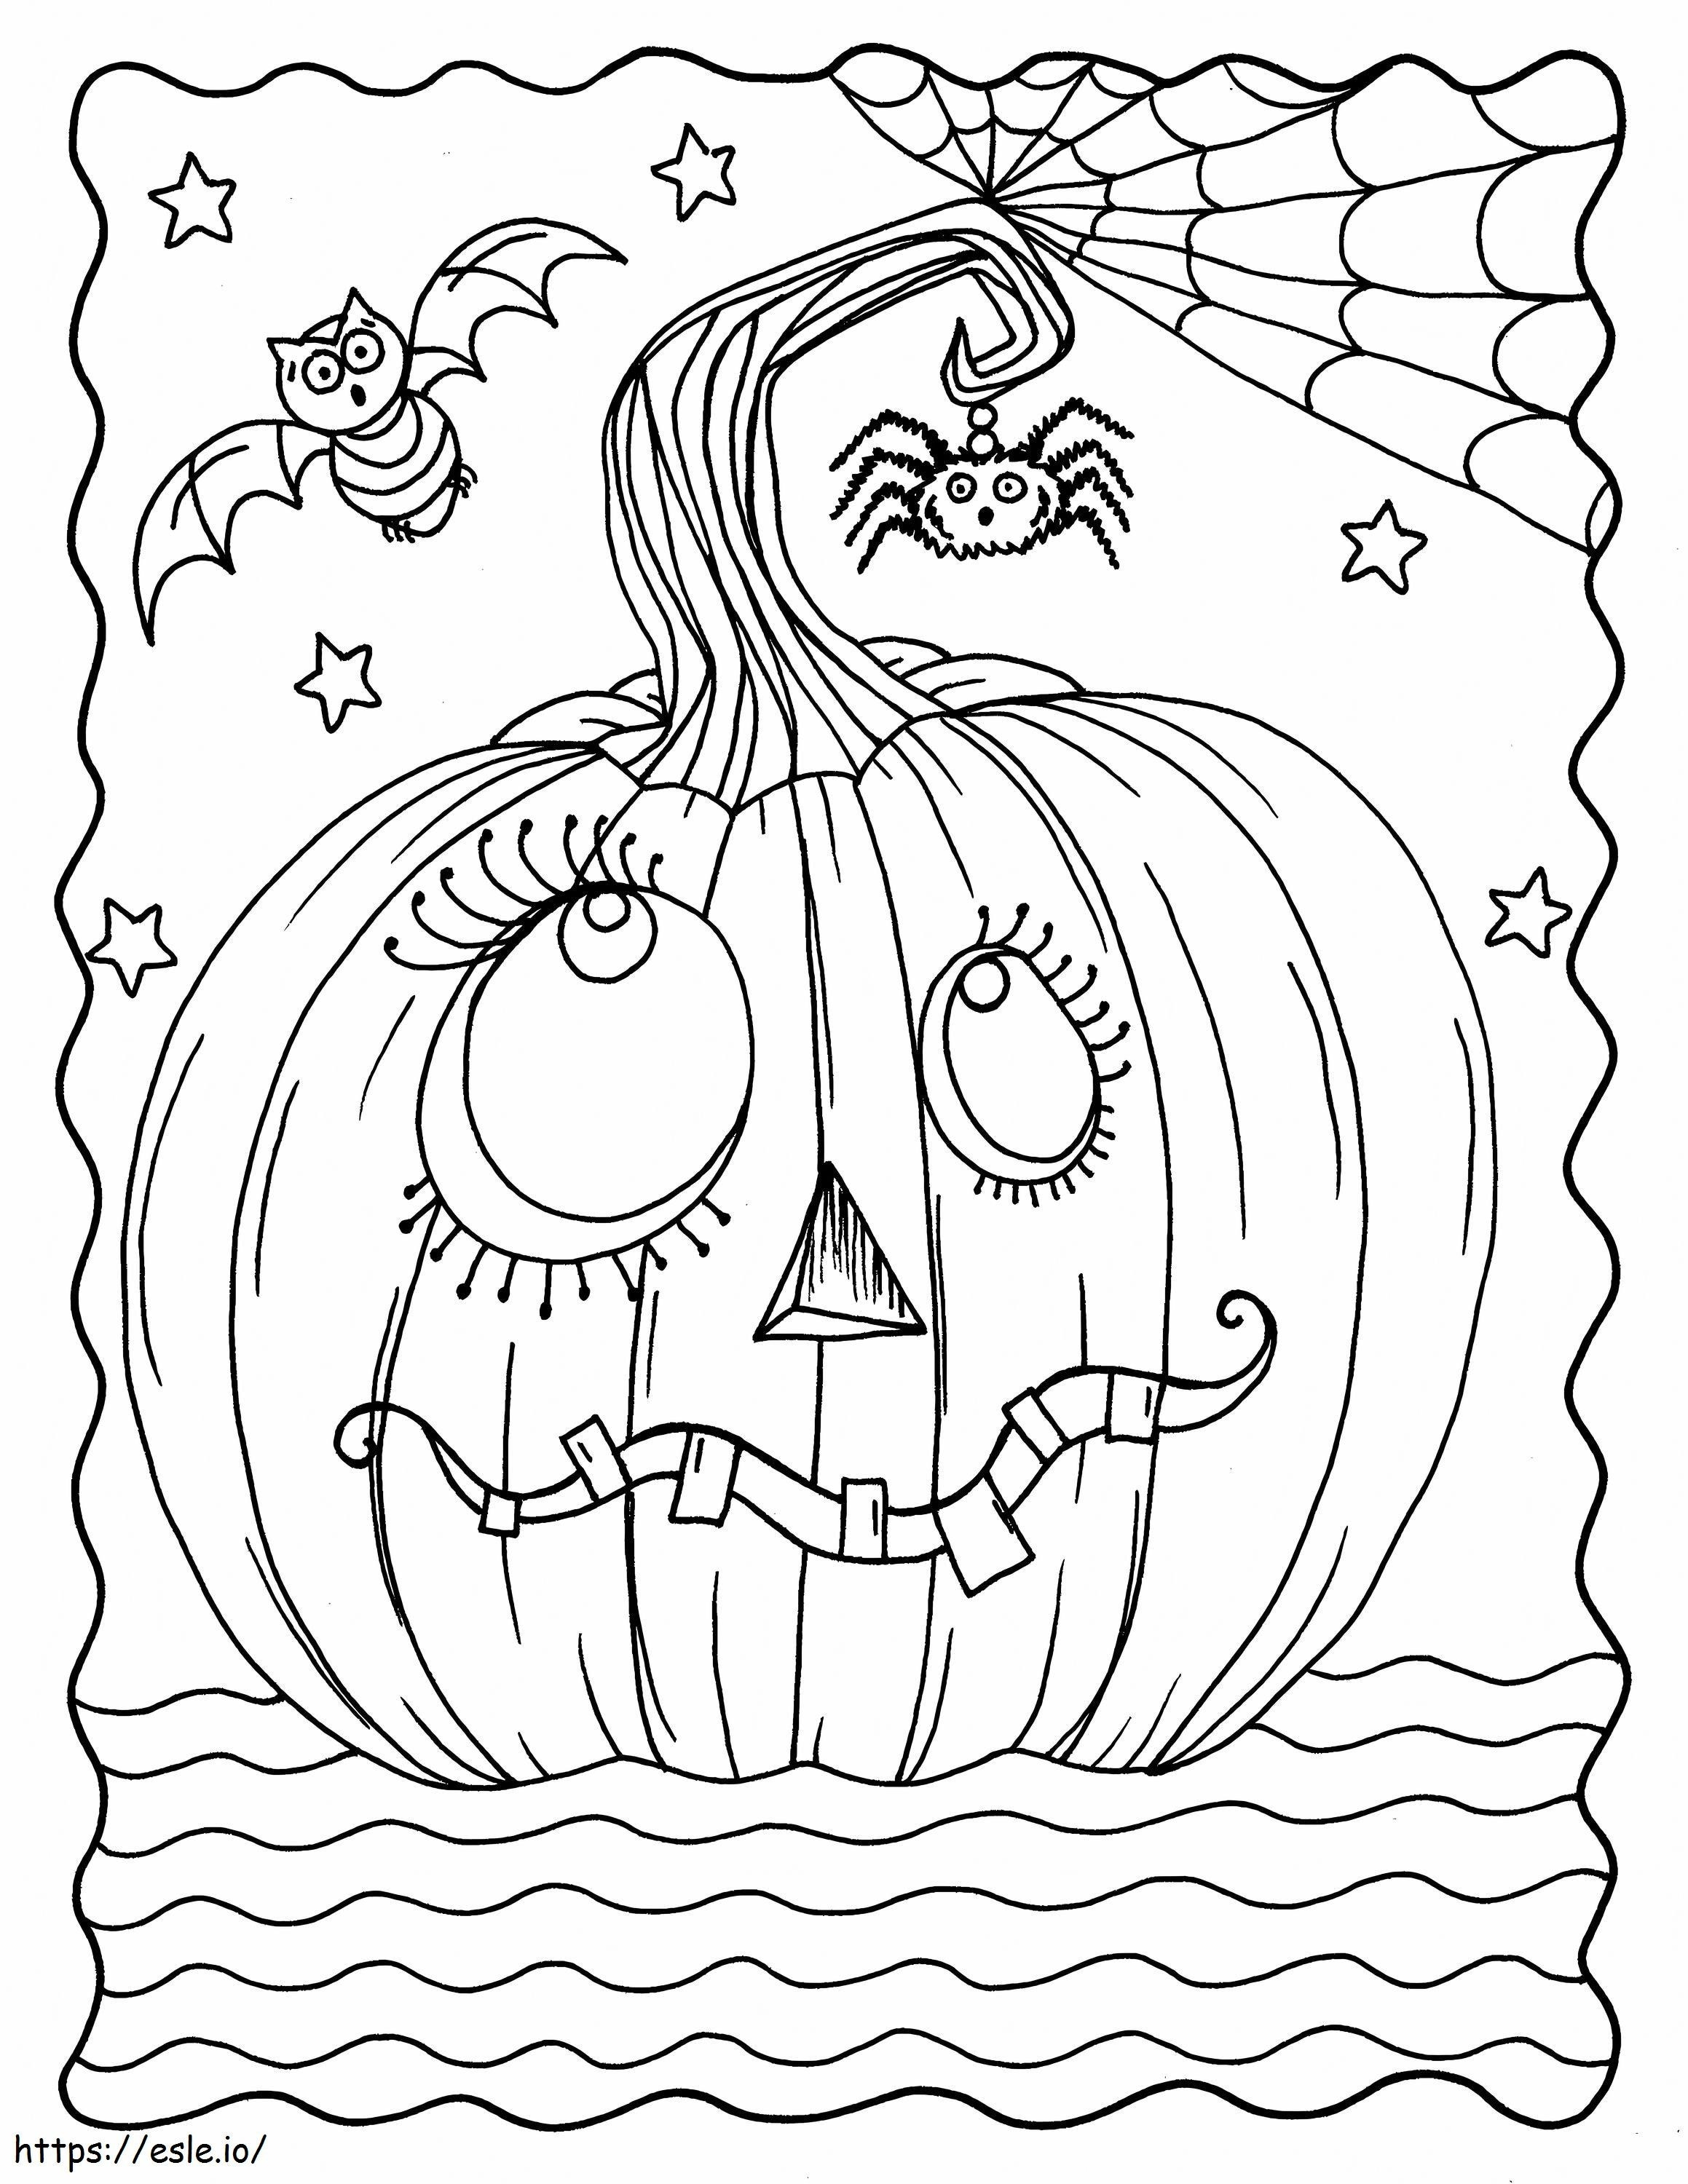 Funny Pumpkin coloring page